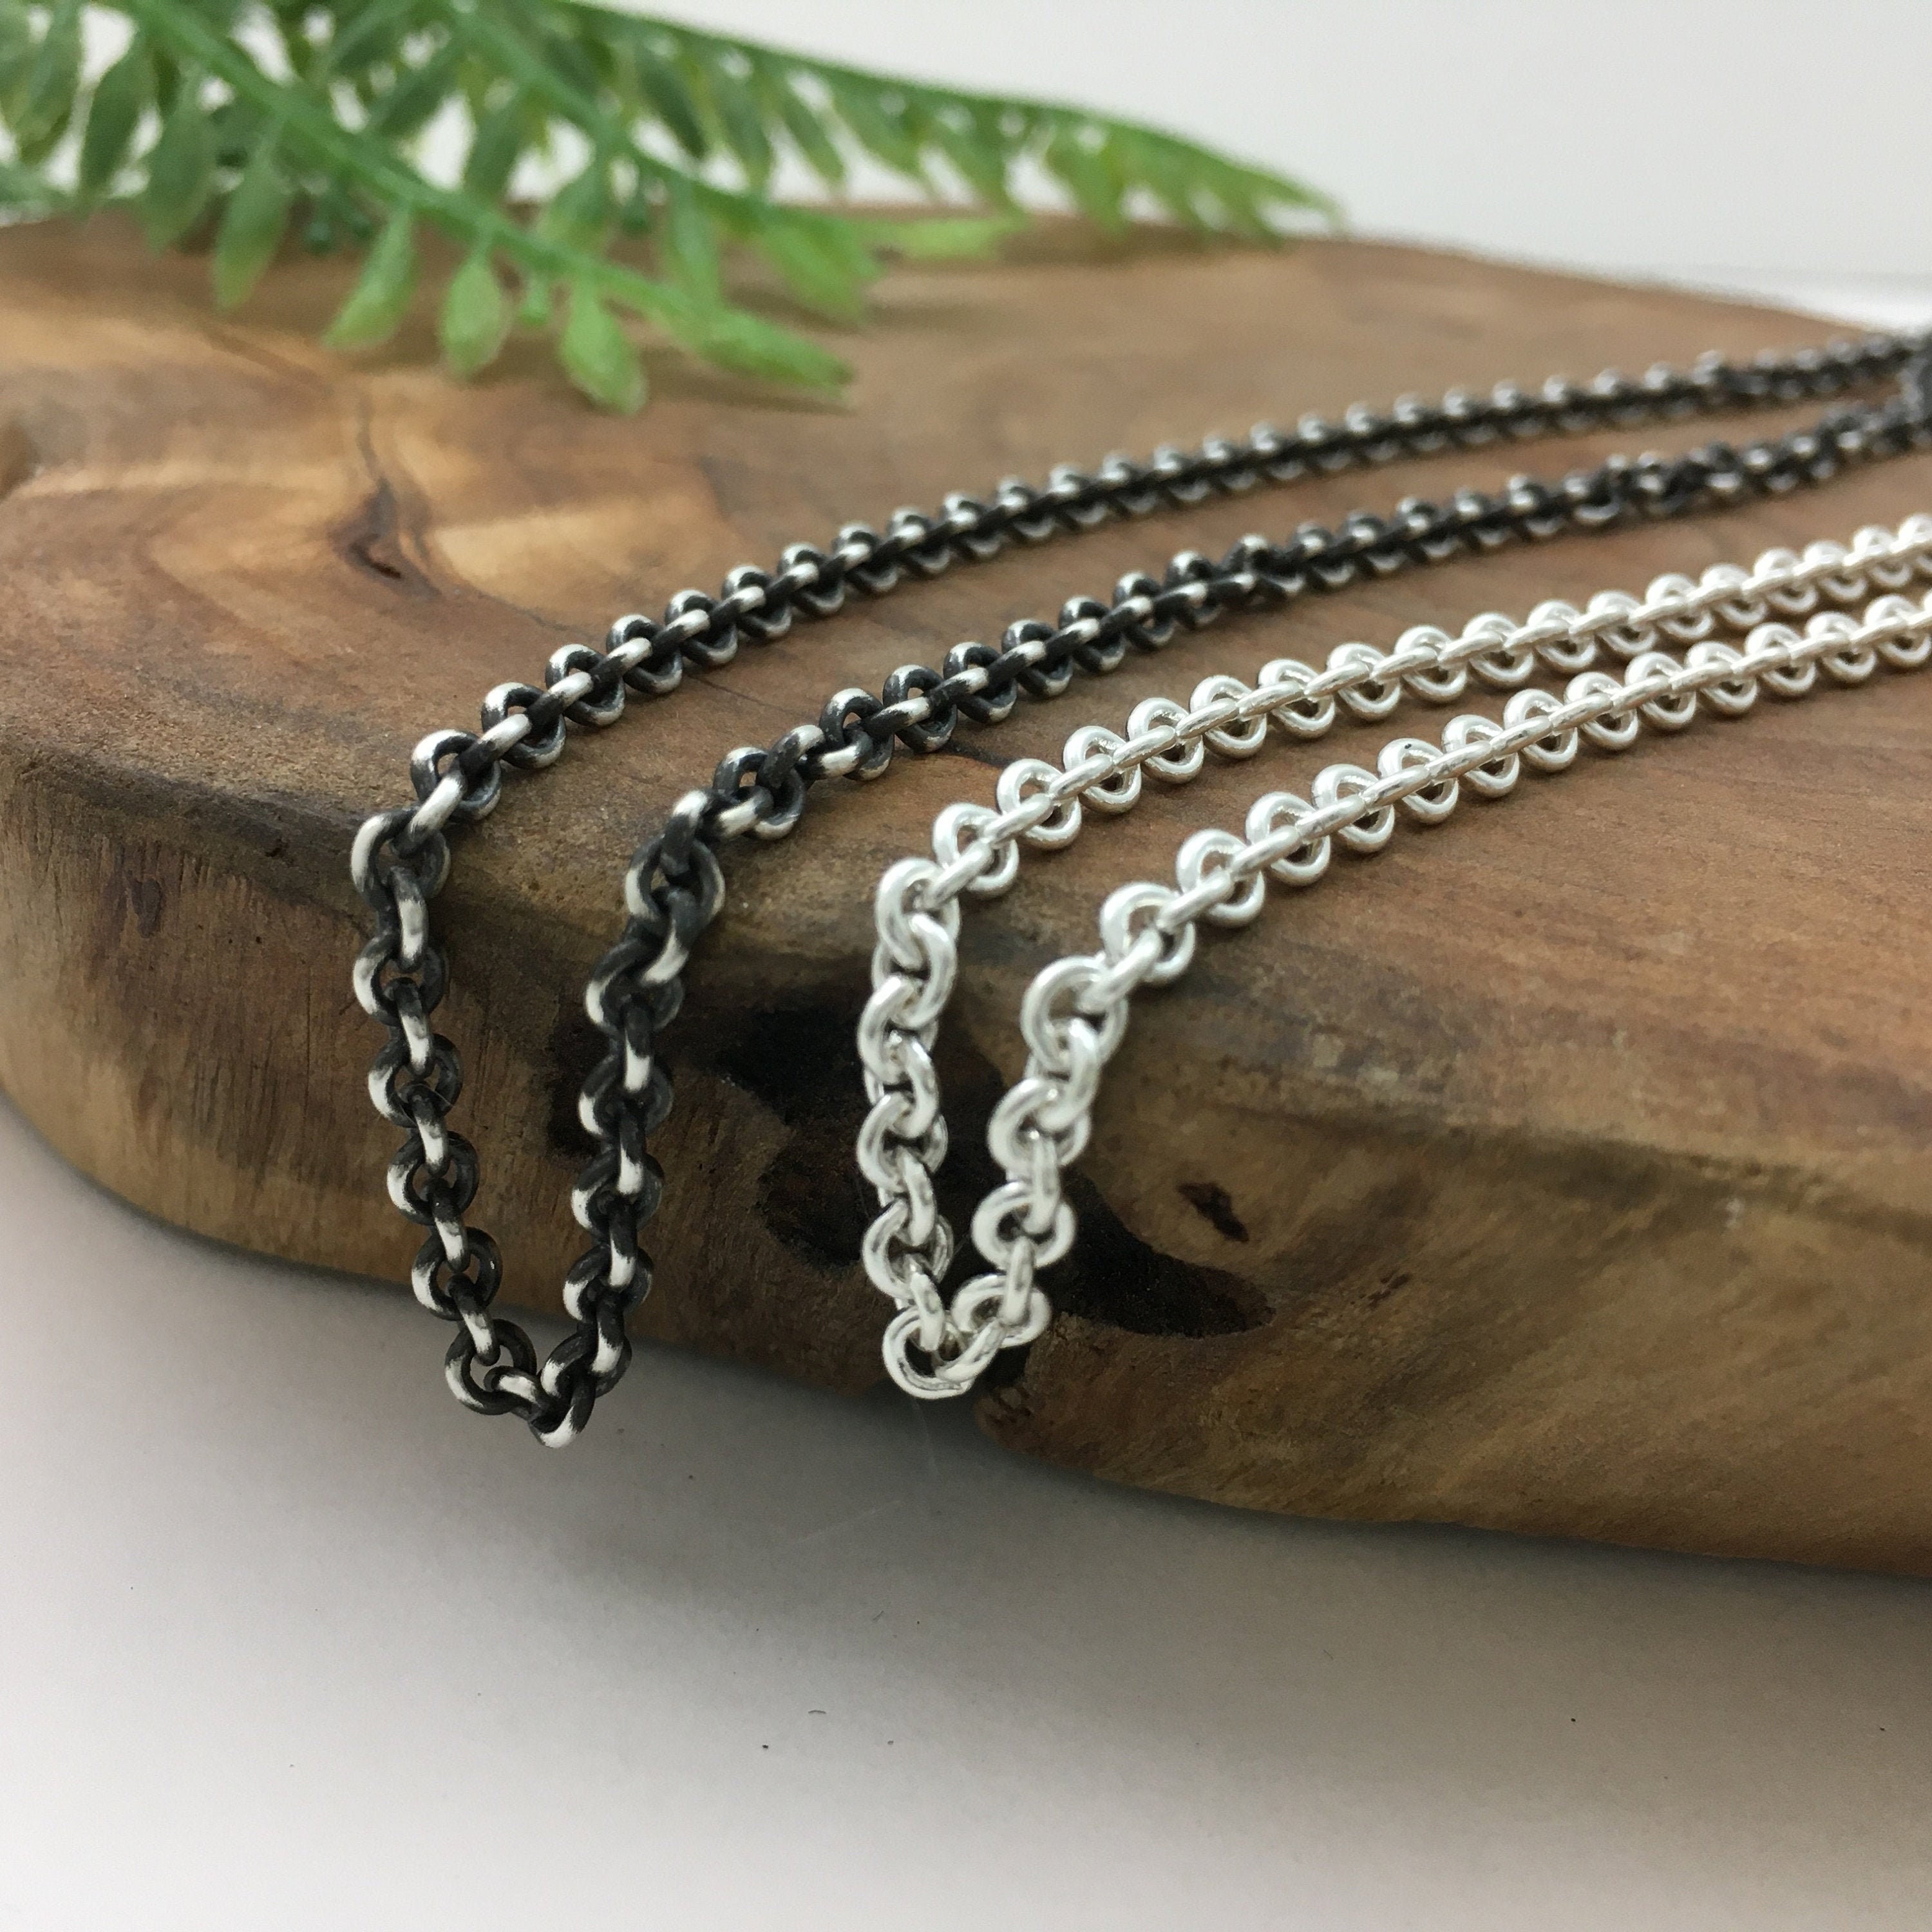 Sterling Silver Chain Length Extender for Necklace or Bracelet, 1 Inch,  1.5, 2 Inch, 3, 4 or 5 Inch Extension Lengthener Adjuster Resizer 